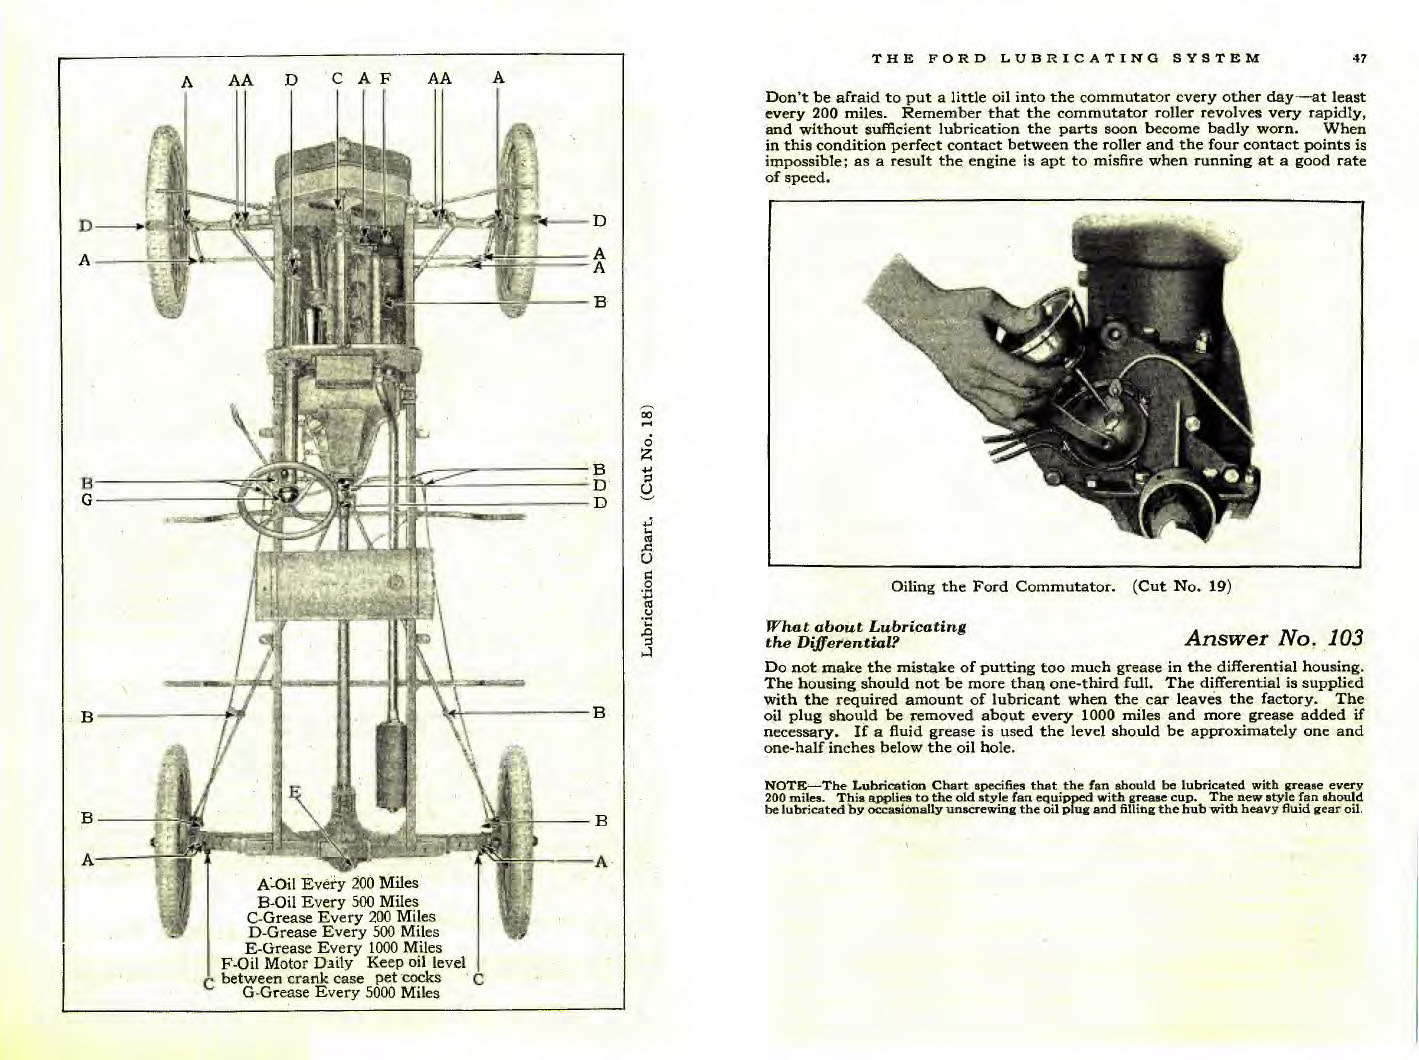 n_1922 Ford Manual-46-47.jpg